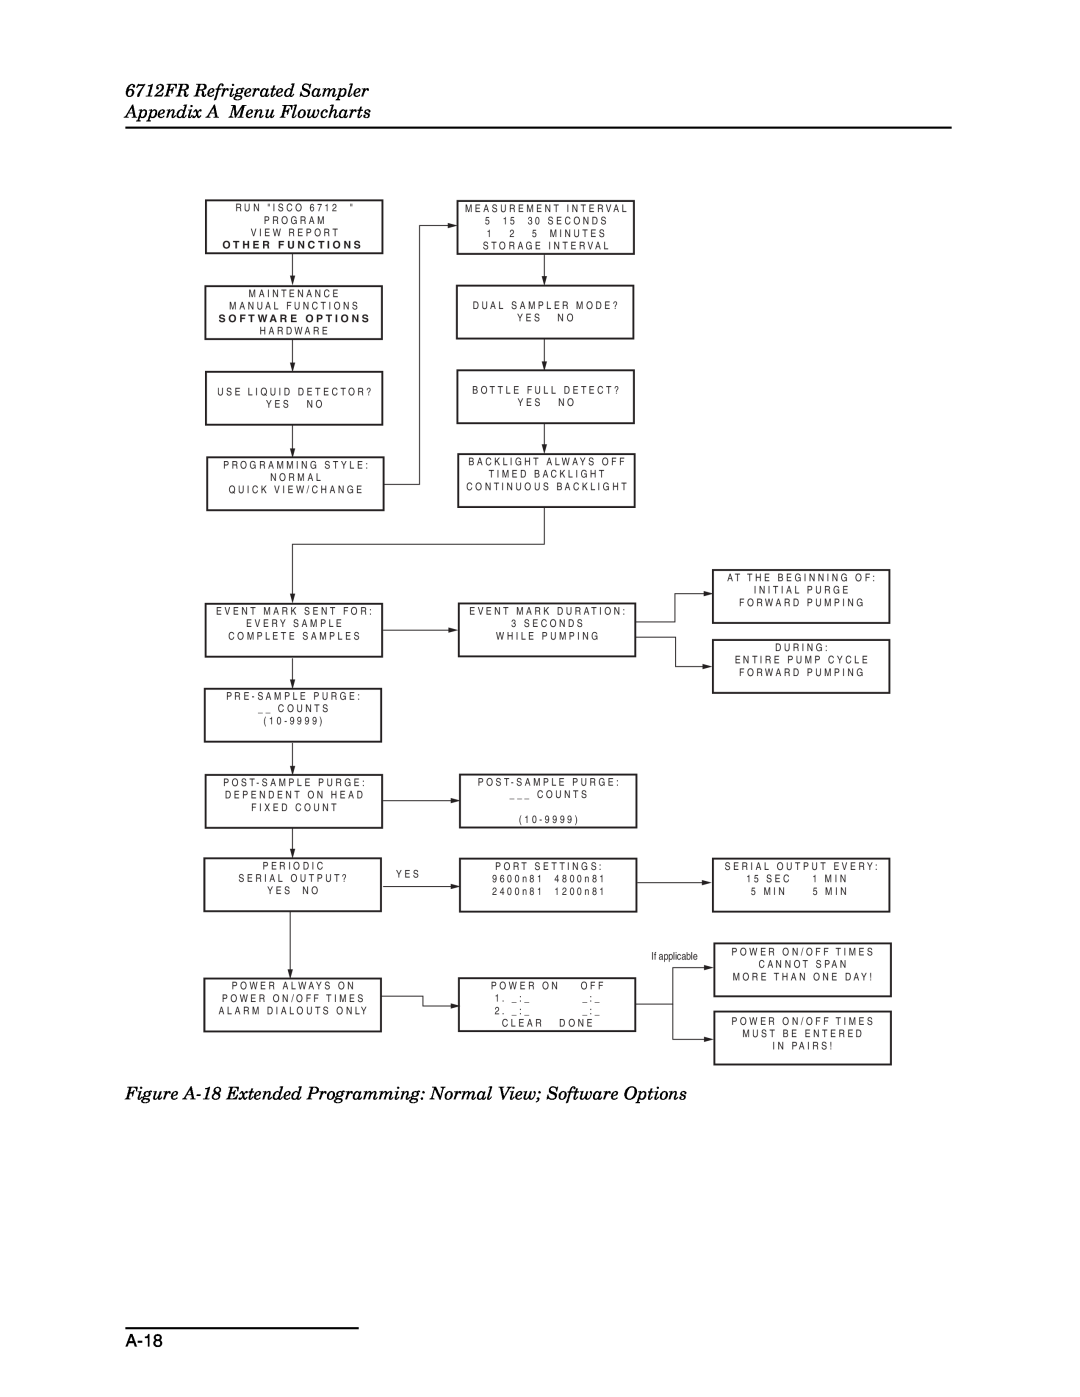 Teledyne manual 6712FR Refrigerated Sampler Appendix A Menu Flowcharts, A-18, O T H E R F U N C T I O N S 